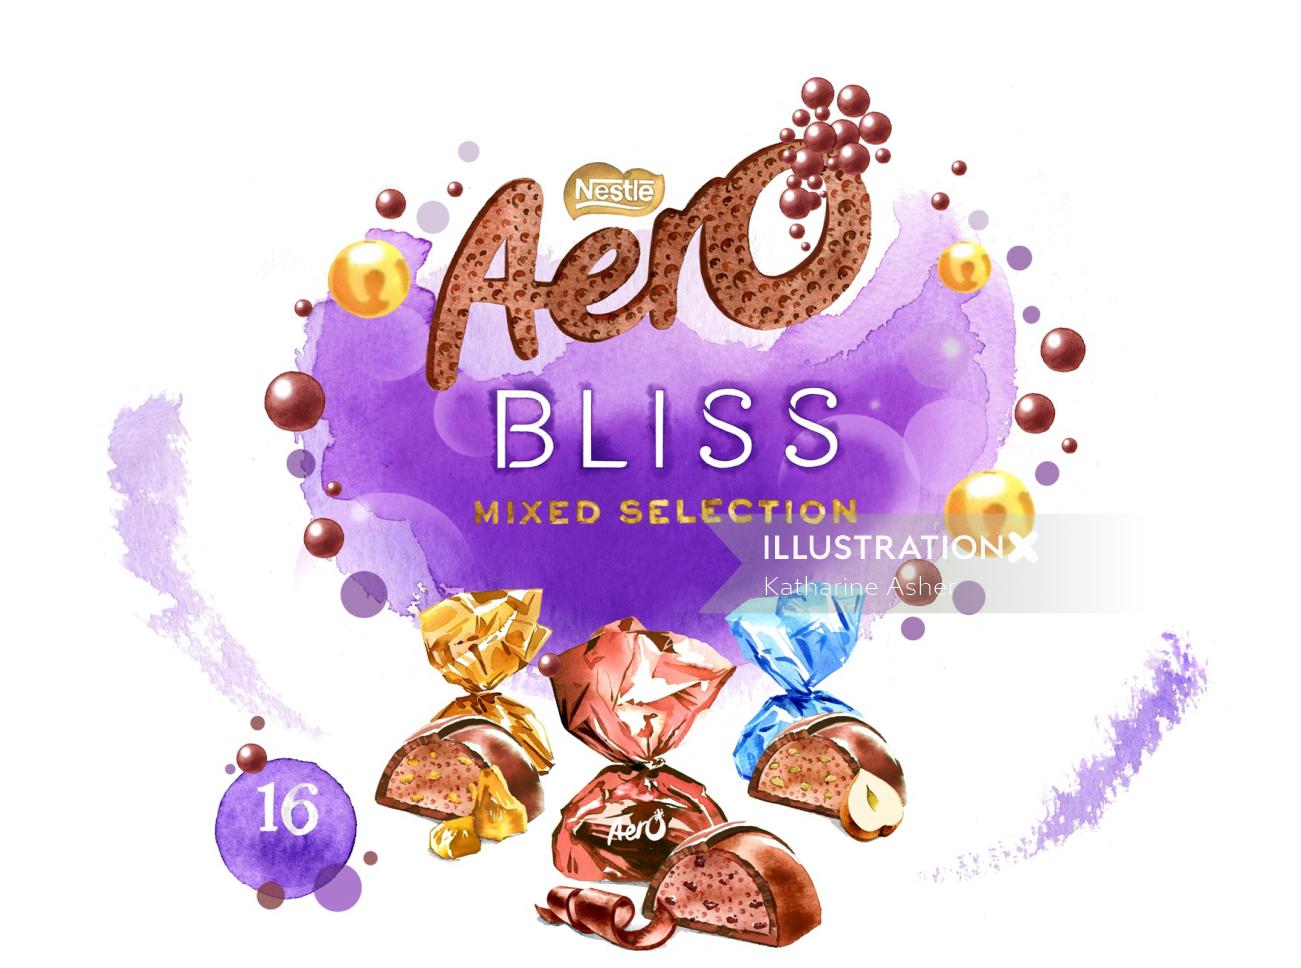 Emballage des chocolats Aero Bliss